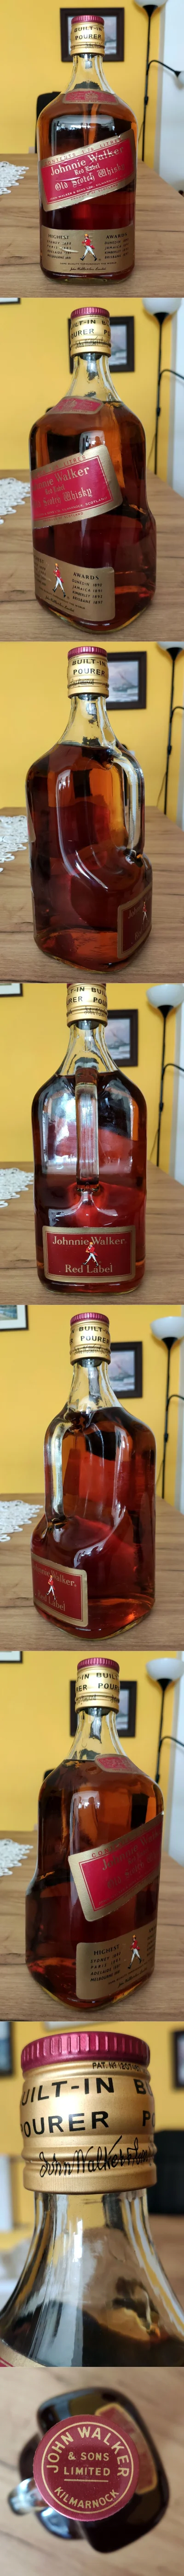 tomilipin - Johnnie Walker Red Label 1,75 L

Butelka z lat 80. ubiegłego wieku, bez...